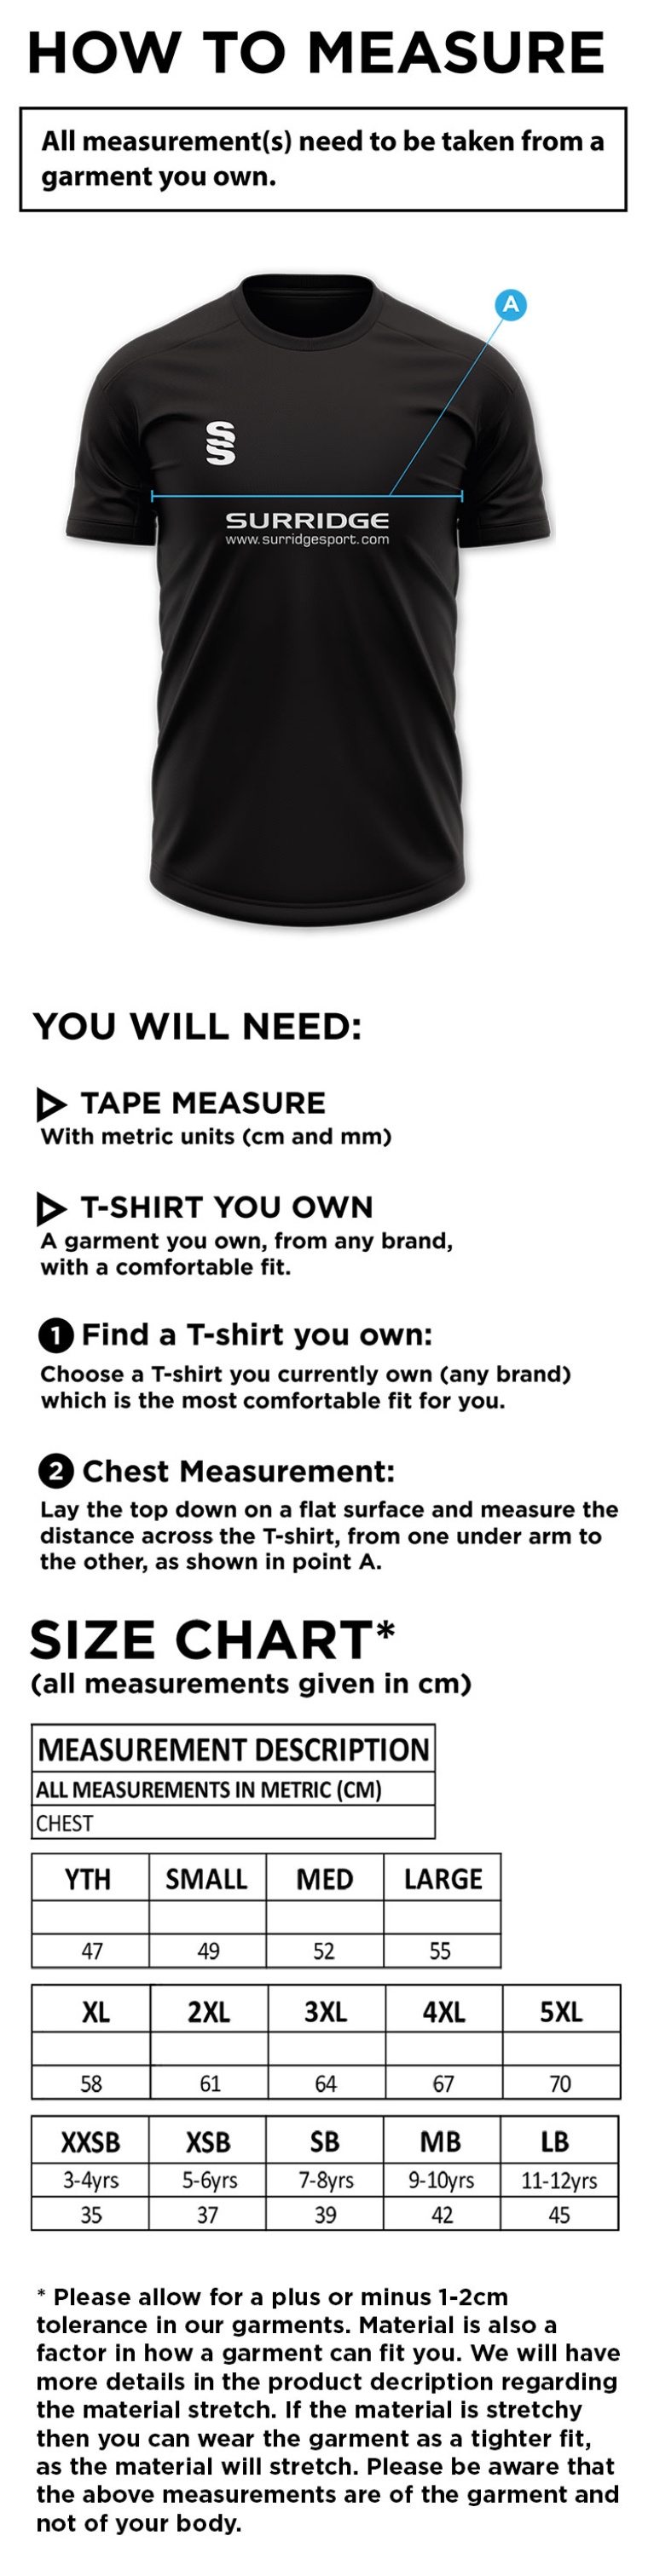 Sandy CC - Blade Polo Shirt - Size Guide